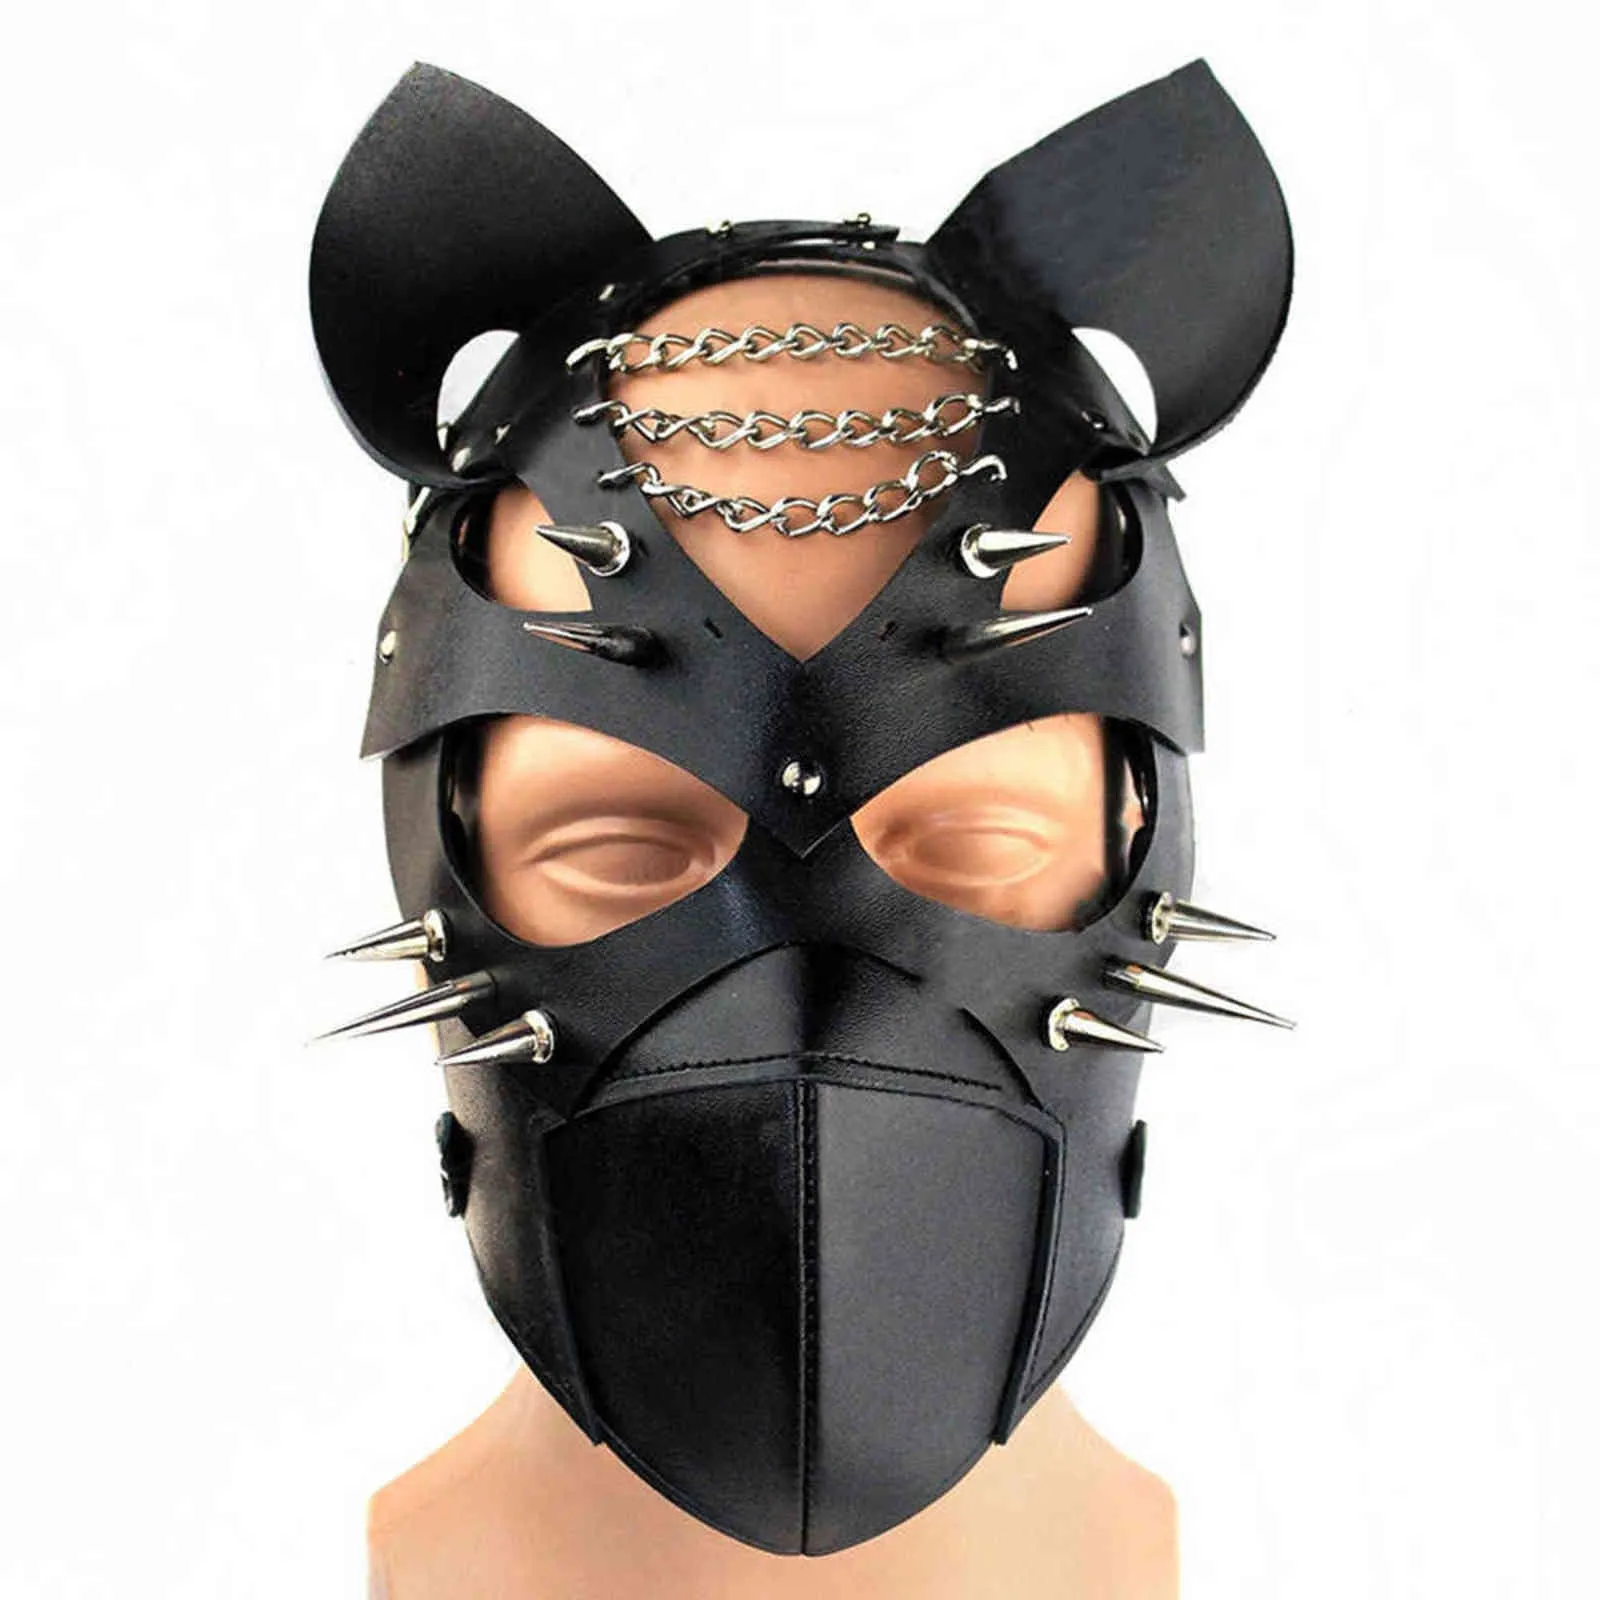 NXY Adult Toys Bdsm Fetish Leather Mask For Men Women Adjustable Cosplay Unisex Bondage Belt Restraints Slave Masks Couples Sex Toy 1201